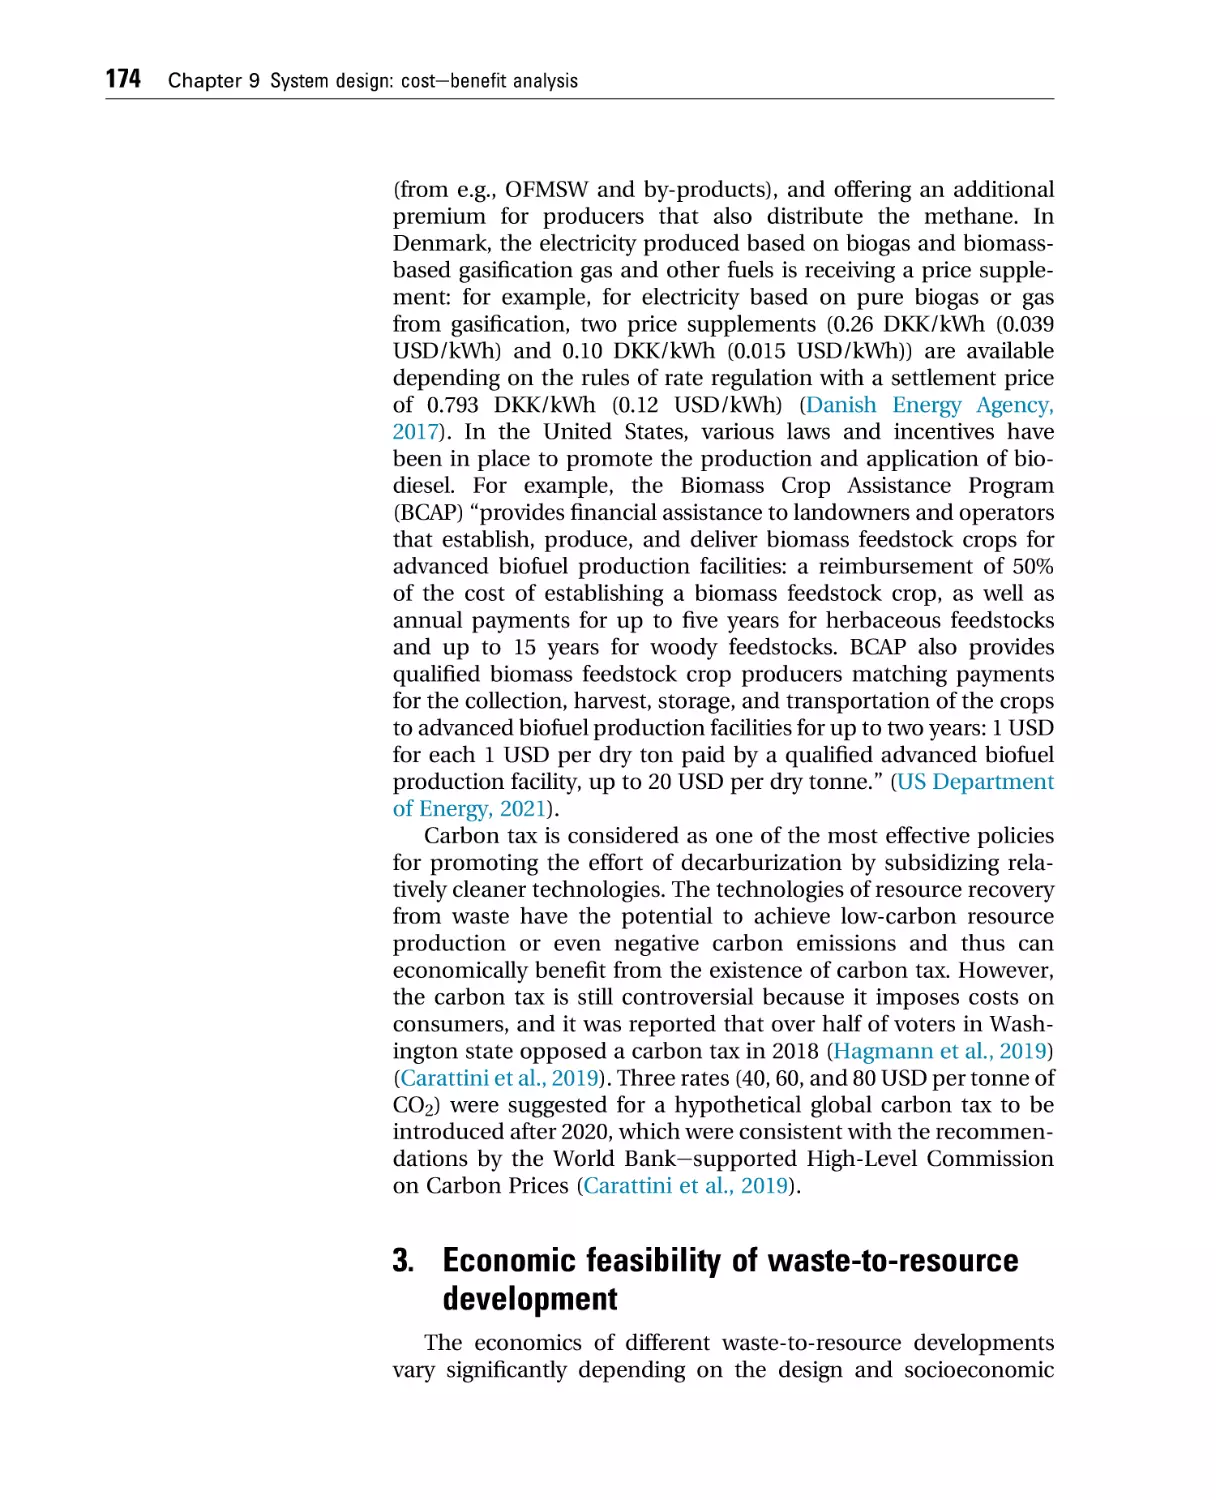 3. Economic feasibility of waste-to-resource development